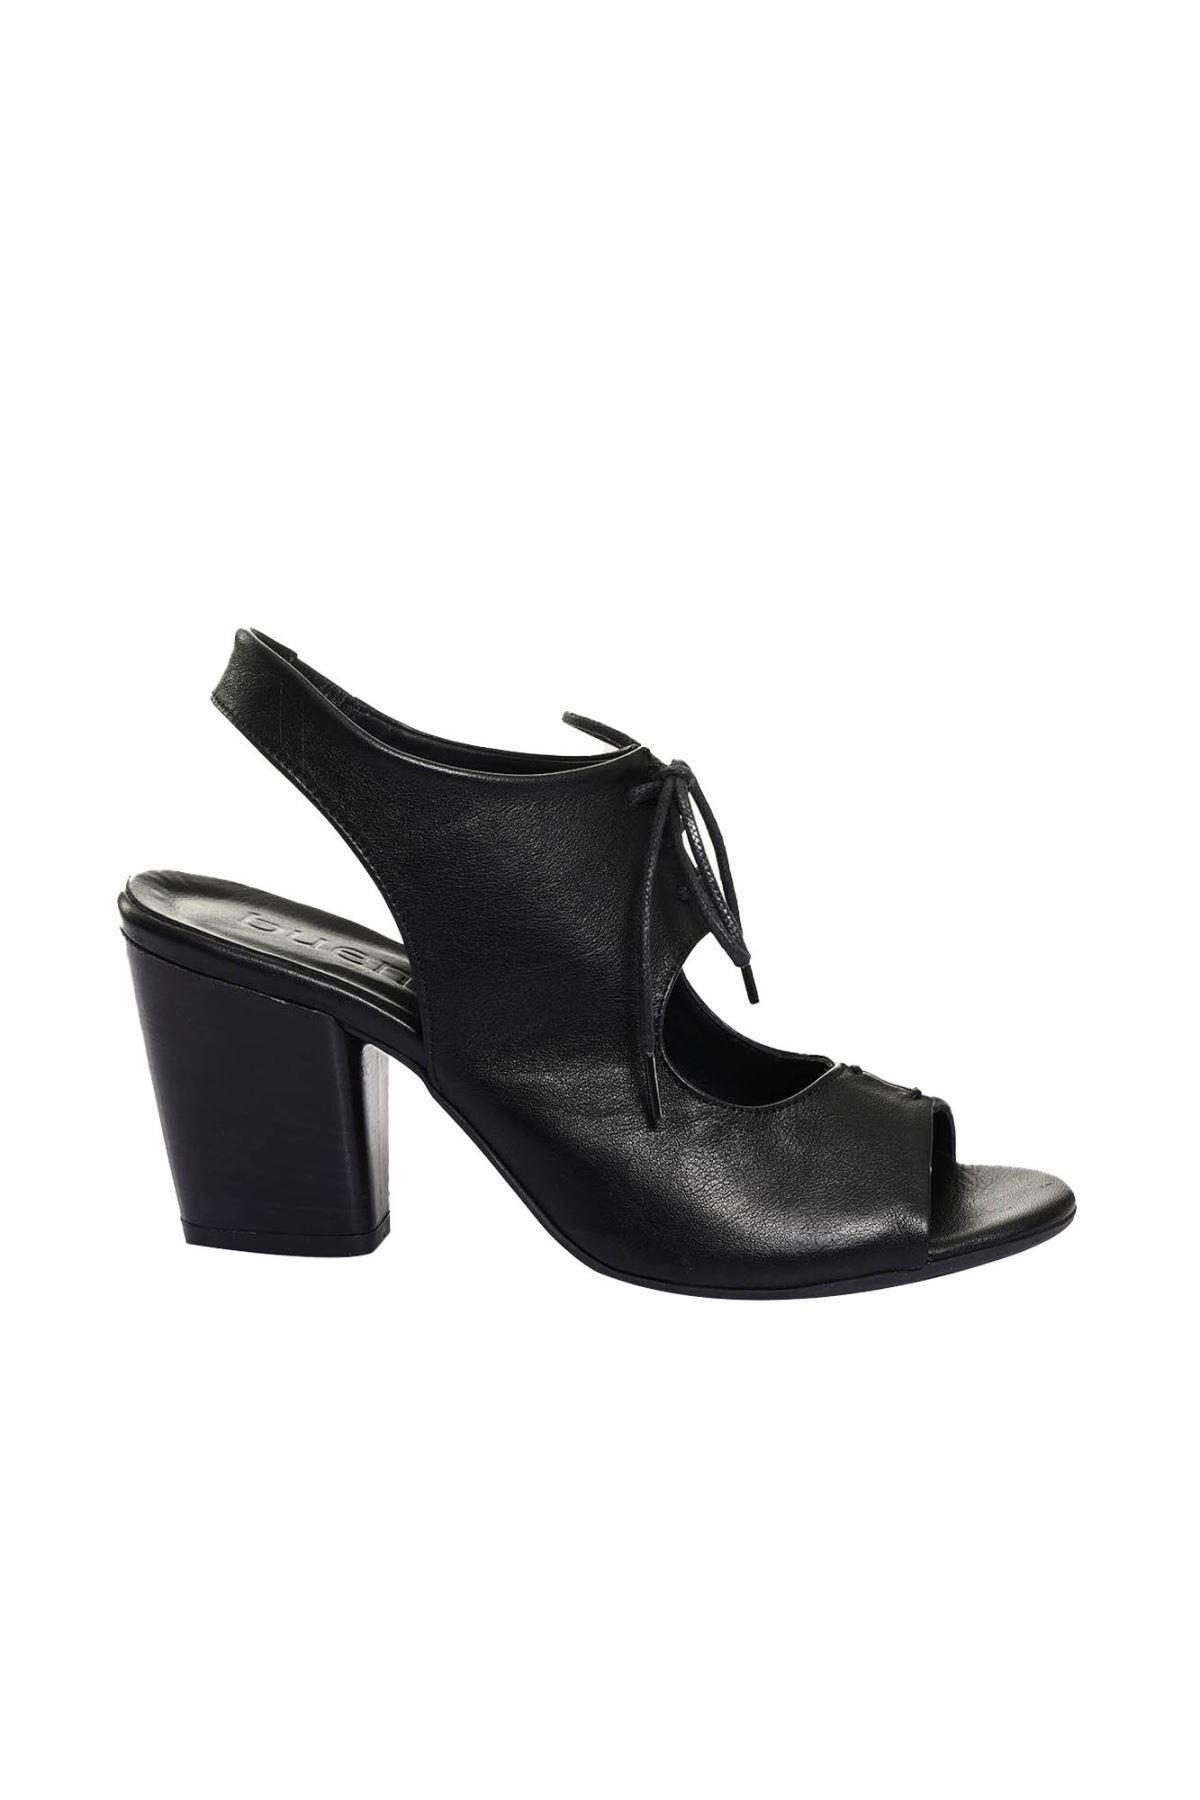 BUENO Shoes Siyah Deri Kadın Topuklu Sandalet